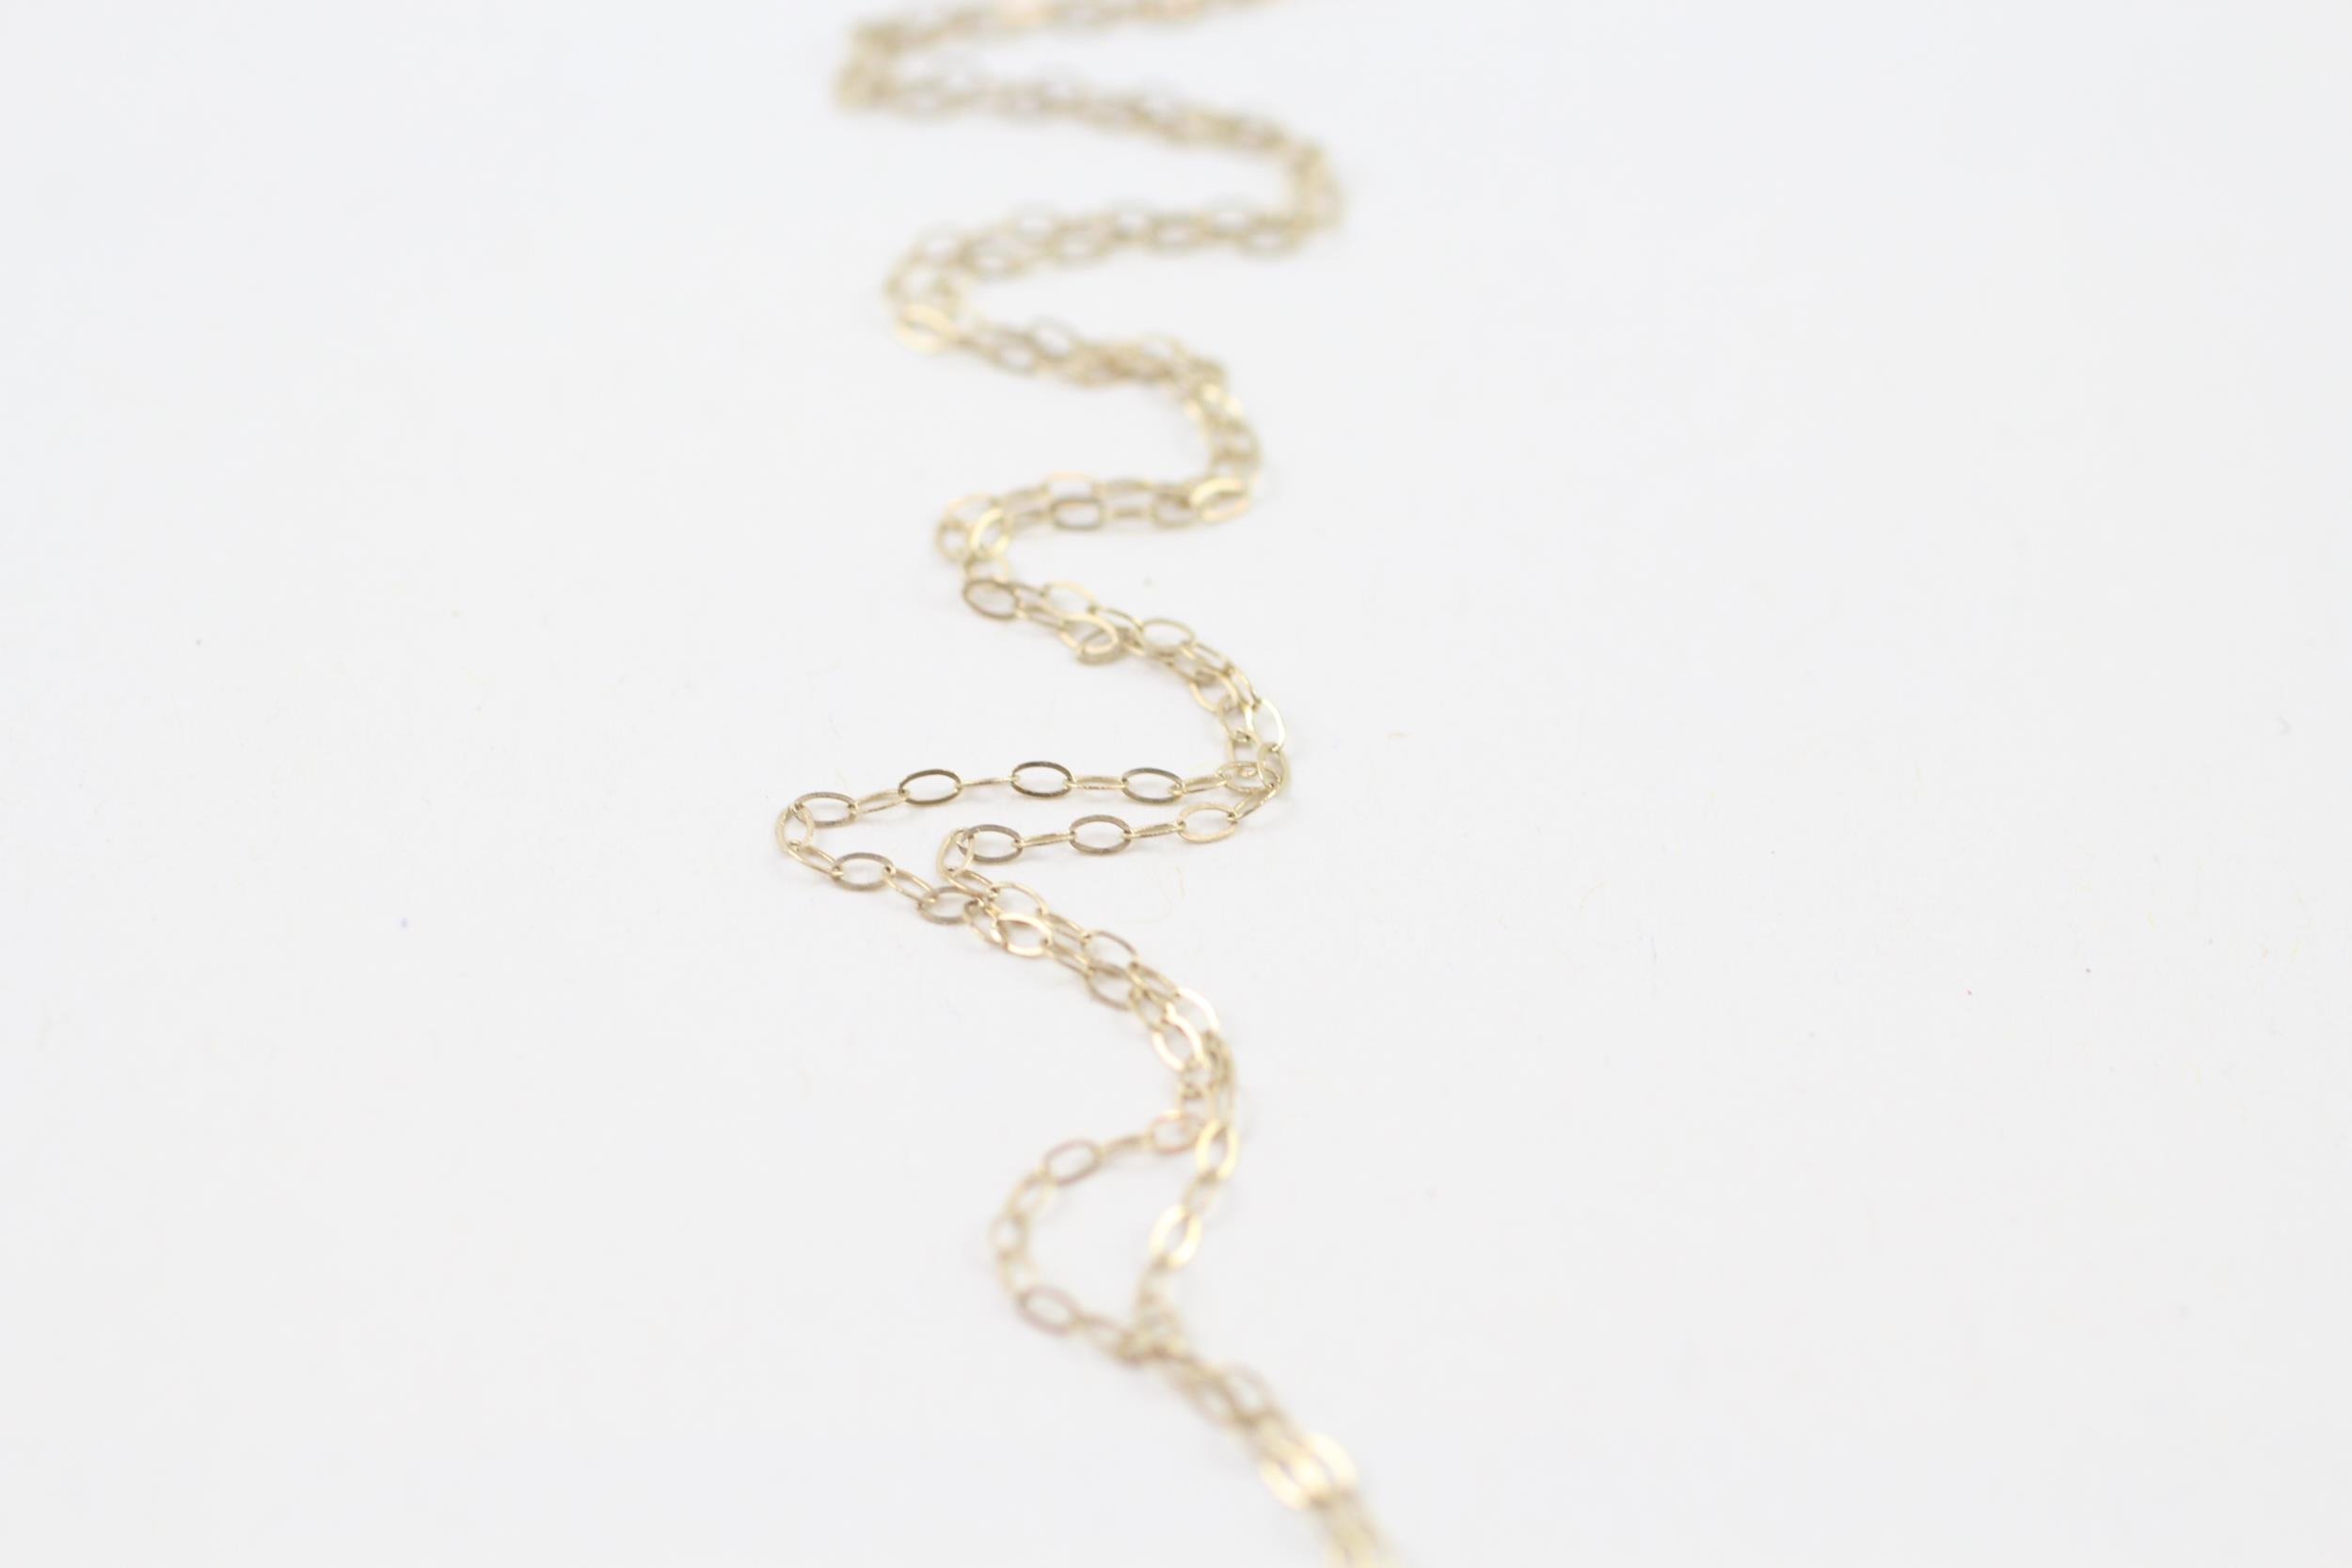 9ct gold diamond & amethyst pendant necklace (2.4g) - Image 2 of 5